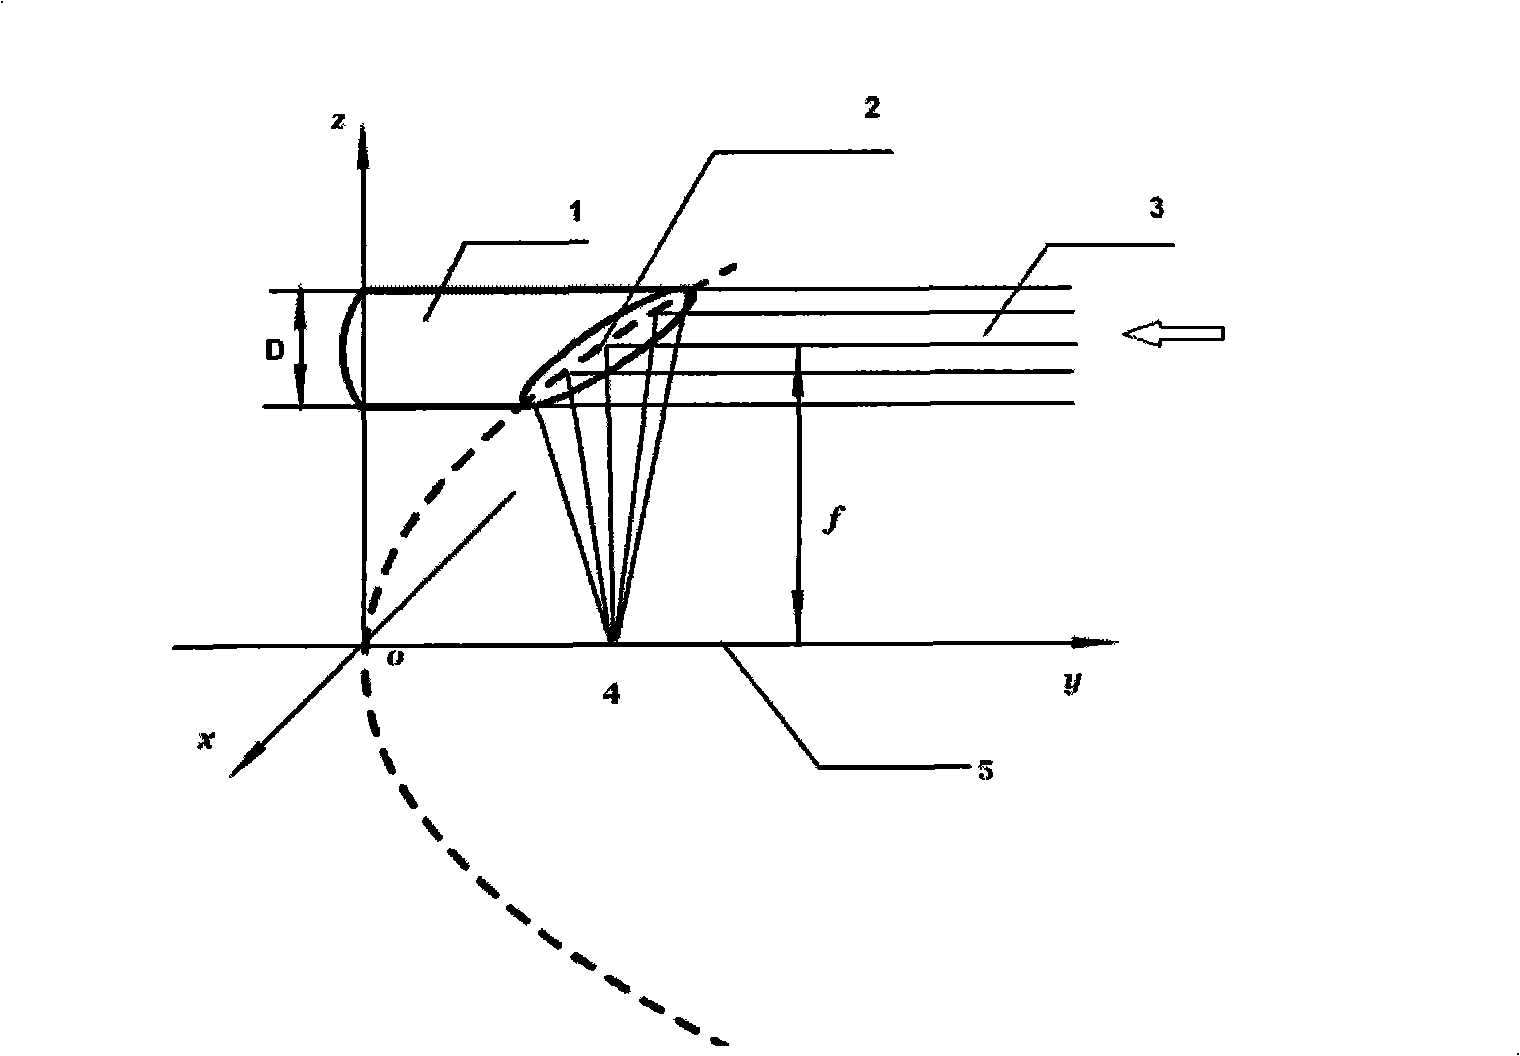 Laser beam focusing integral form paraboloidal mirror